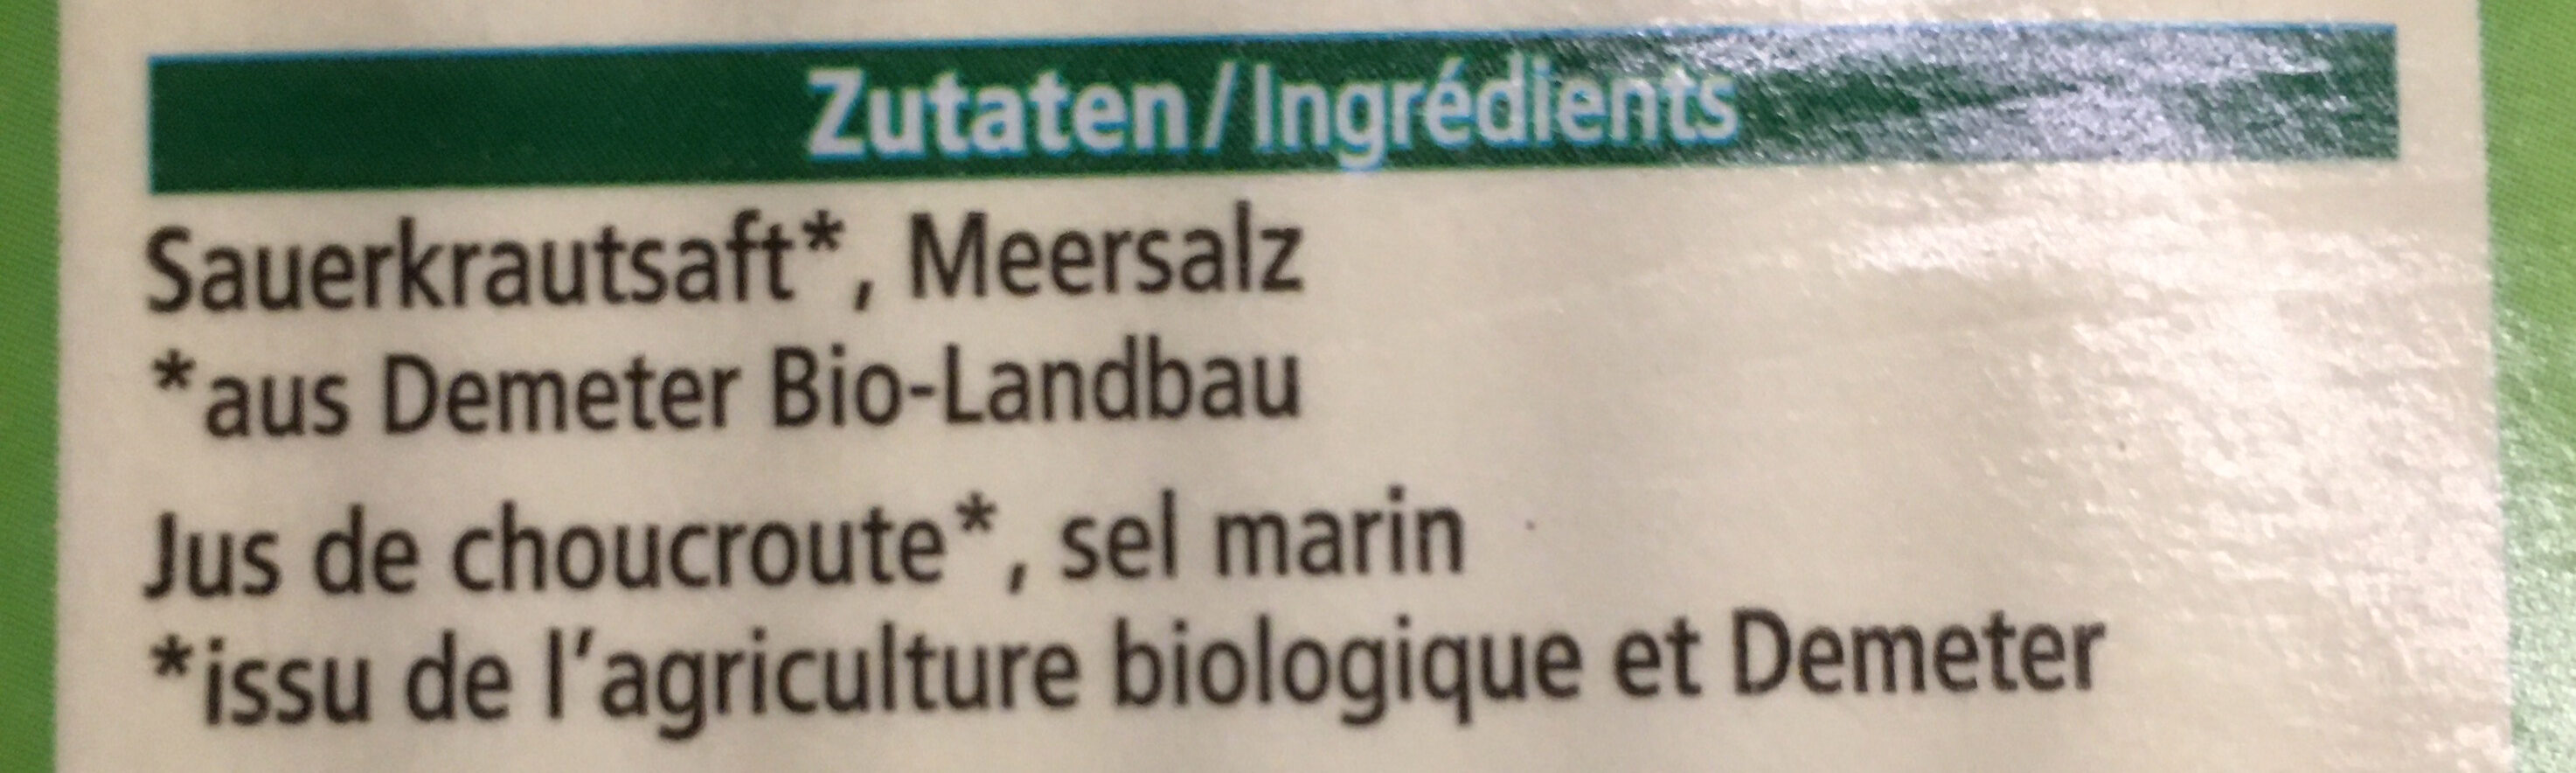 Sauerkrautsaft - Ingredienti - de